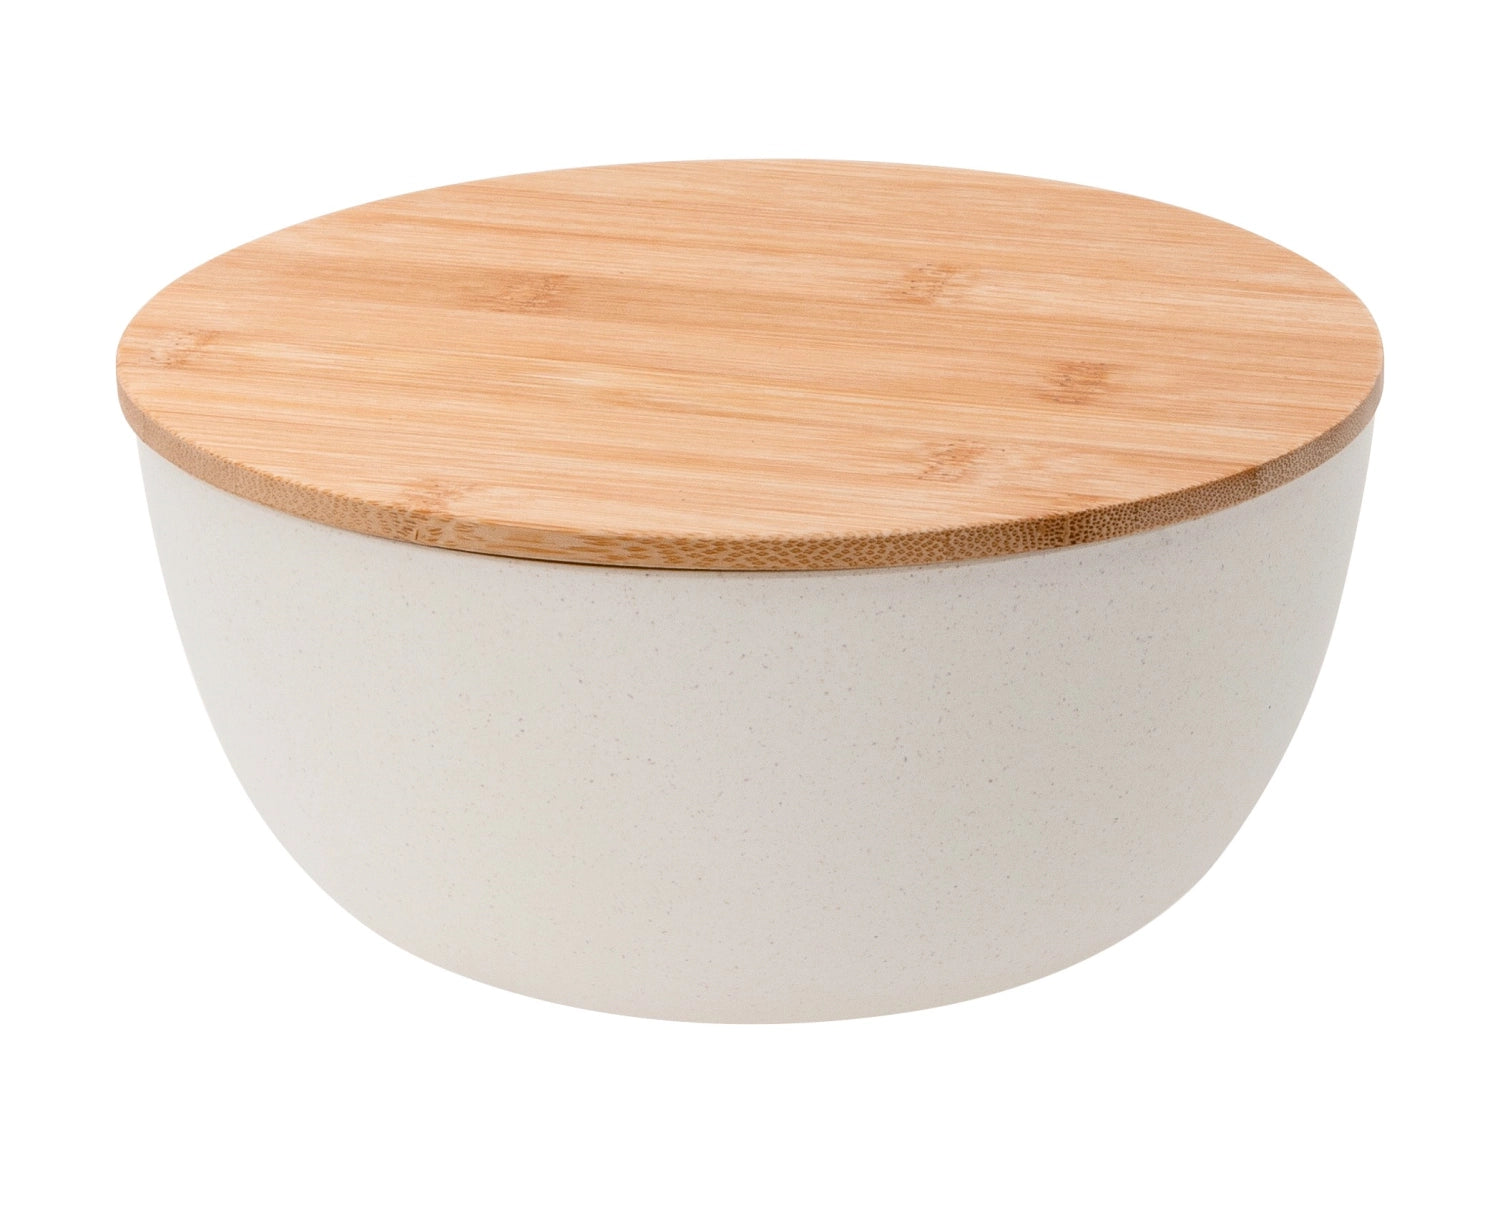 Salatschüssel mit Bambusdeckel, cream, D28cm - KAQTU Design